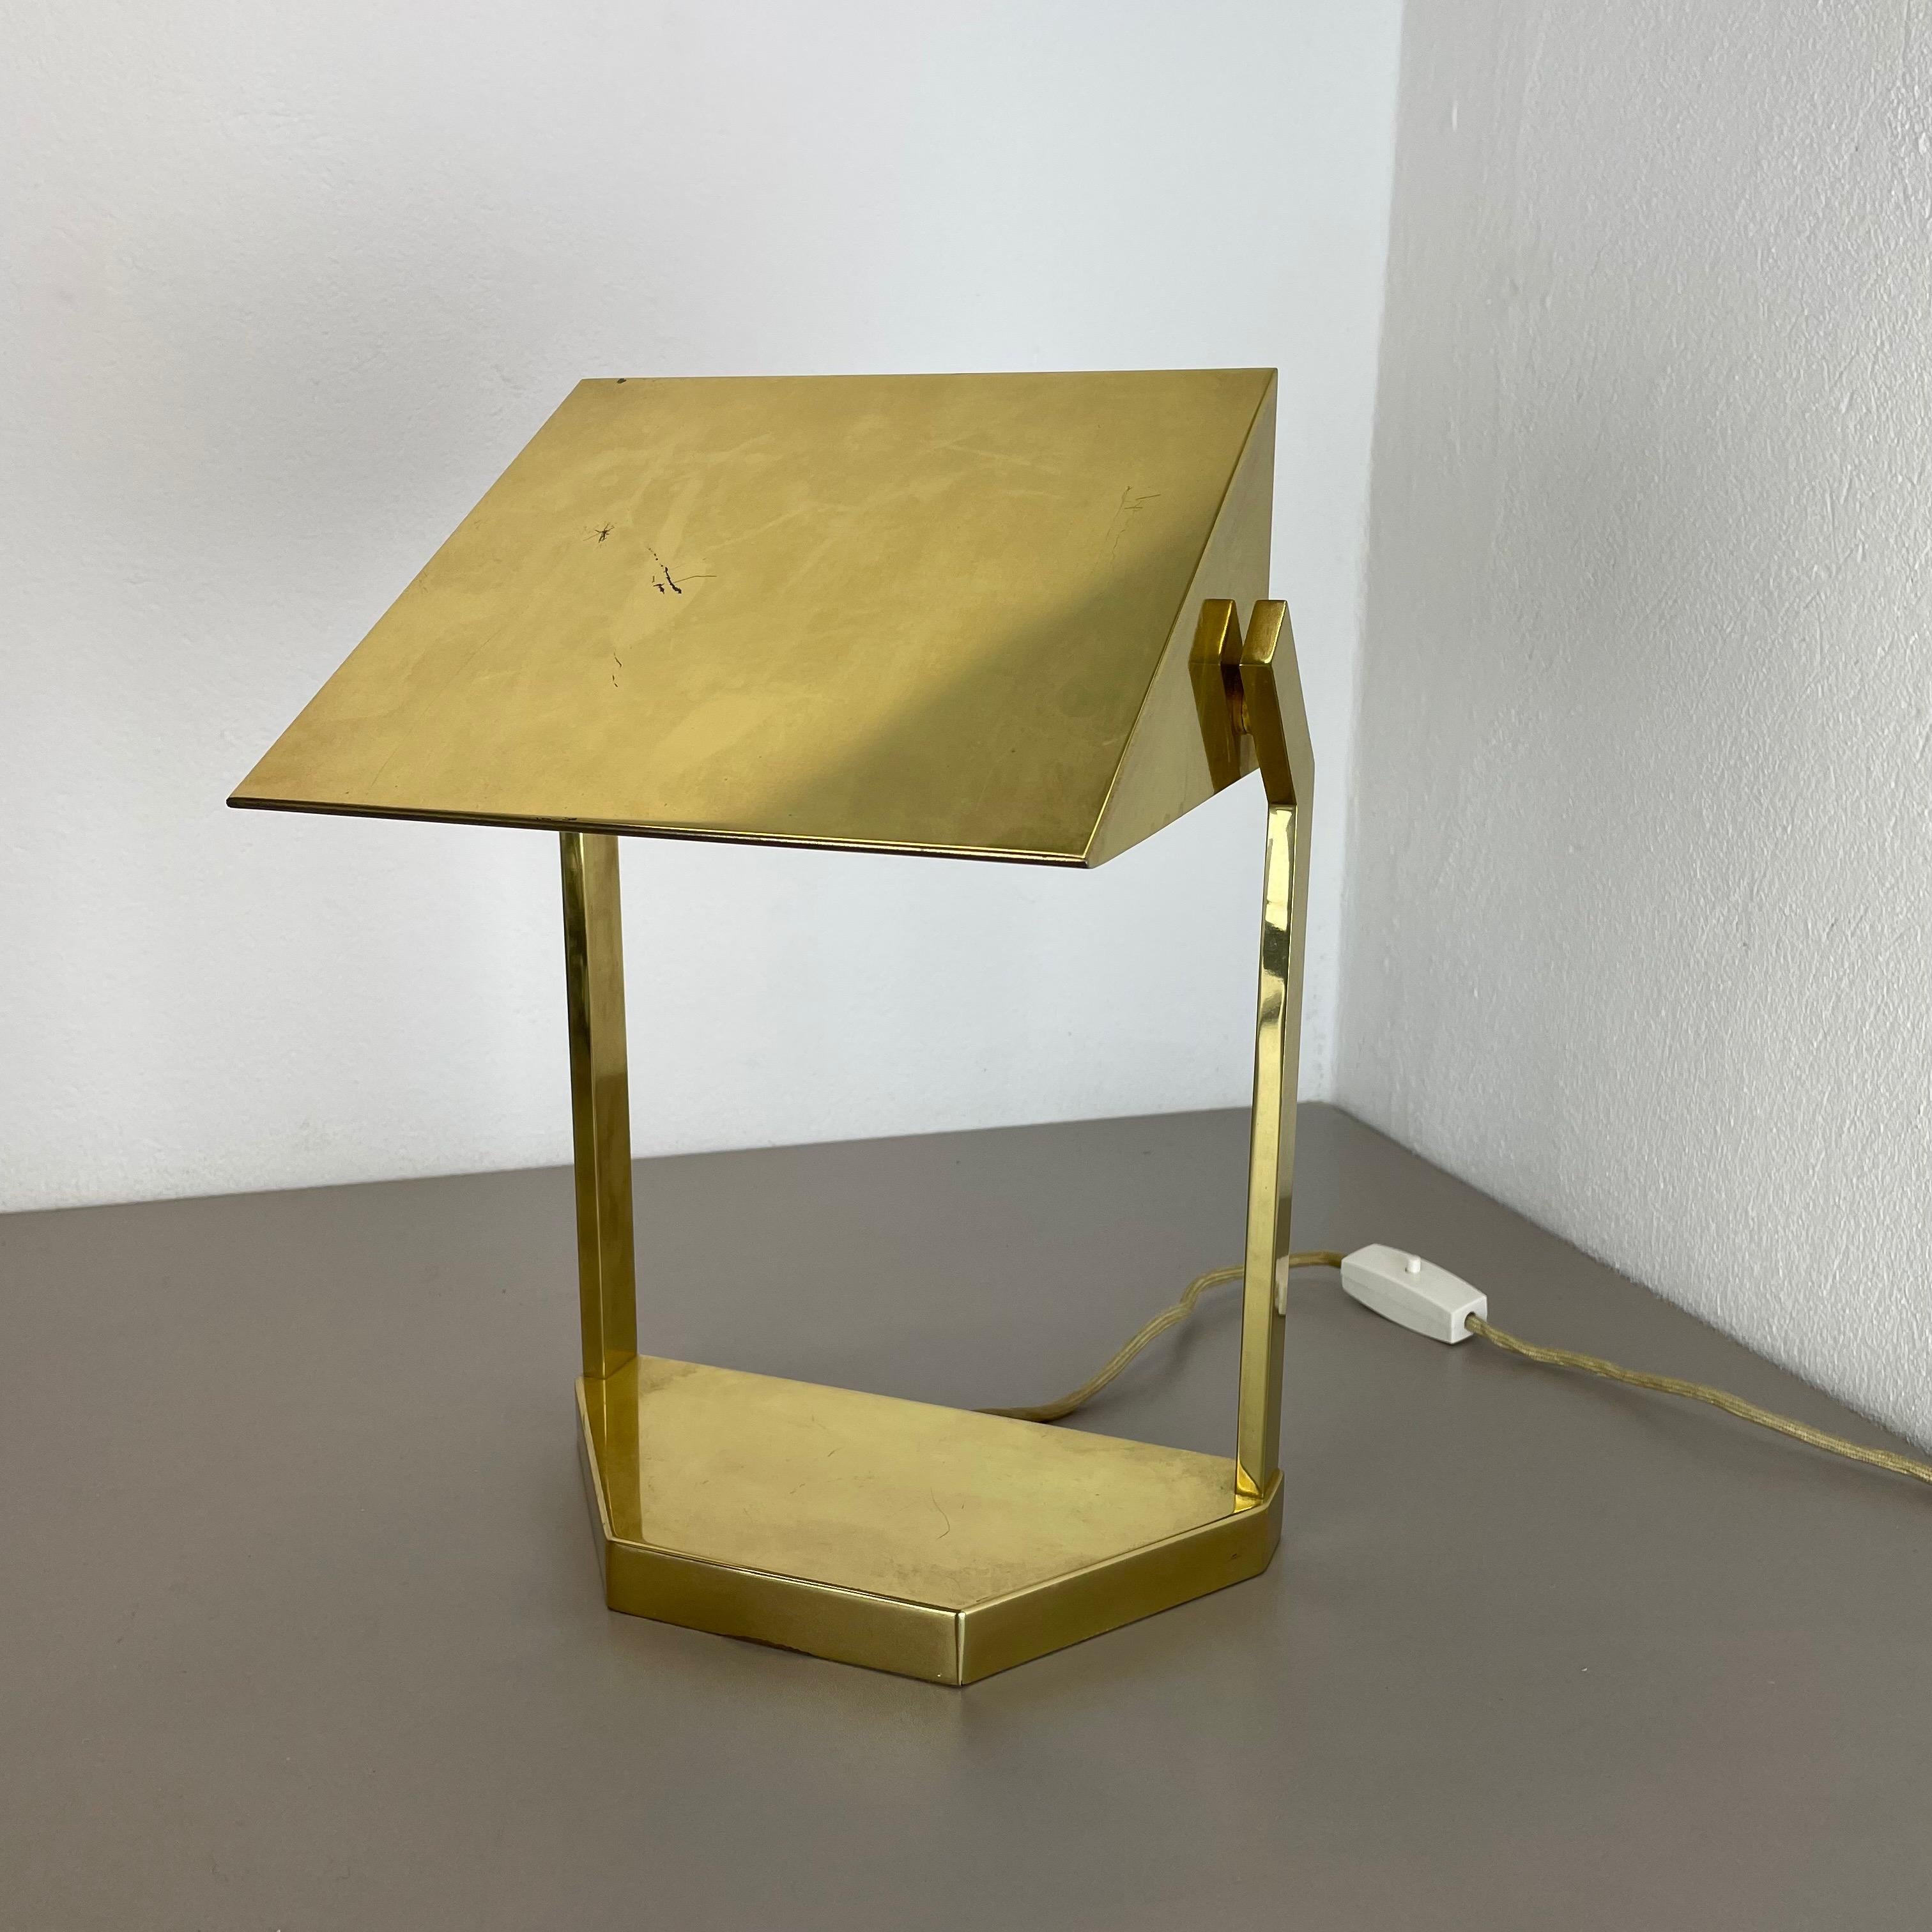 Article:

Table light


Origin:

Germany


Producer:

Vereinigte Werkstätten München


Age:

1970s



This original vintage Minimalist table light was produced in the 1970s in Germany by Vereinigte Werkstätten München. It is